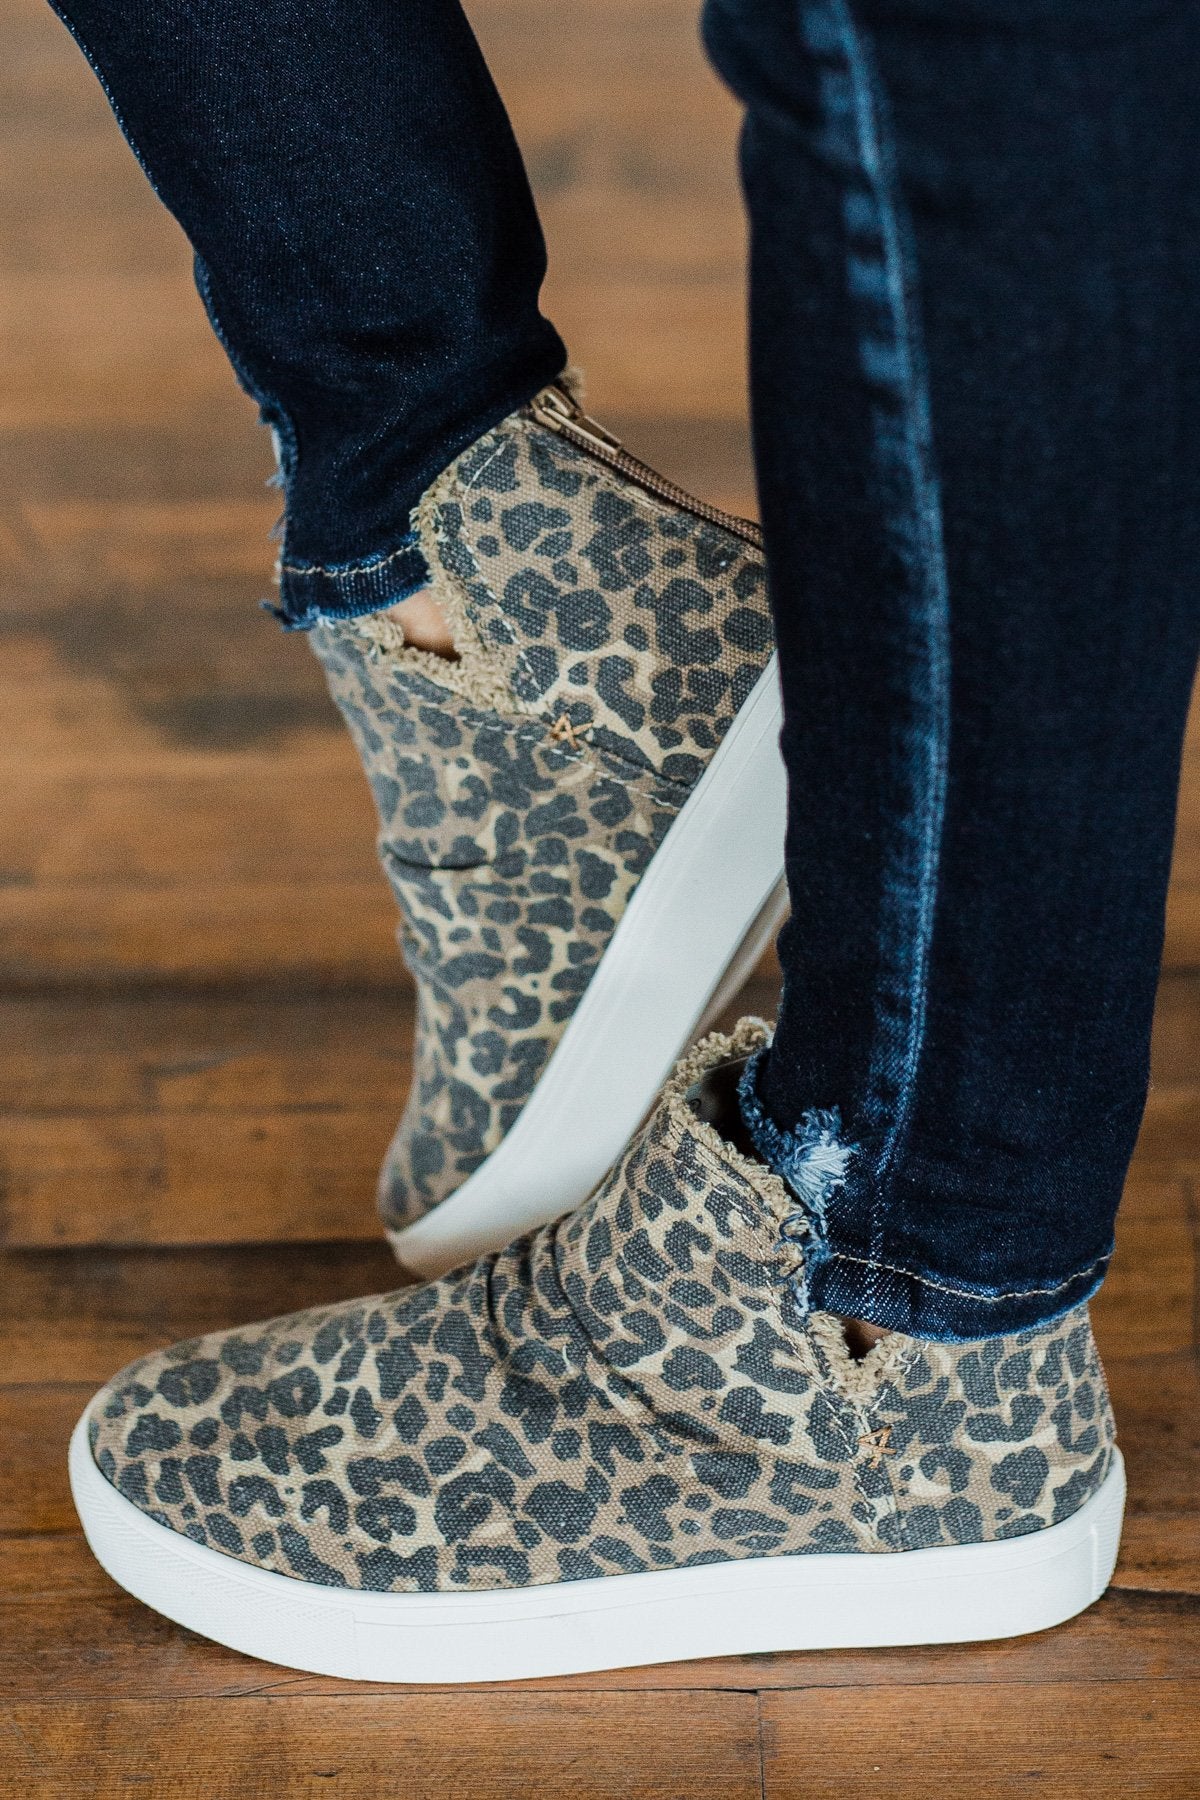 Very G Josie High Top Sneakers- Leopard